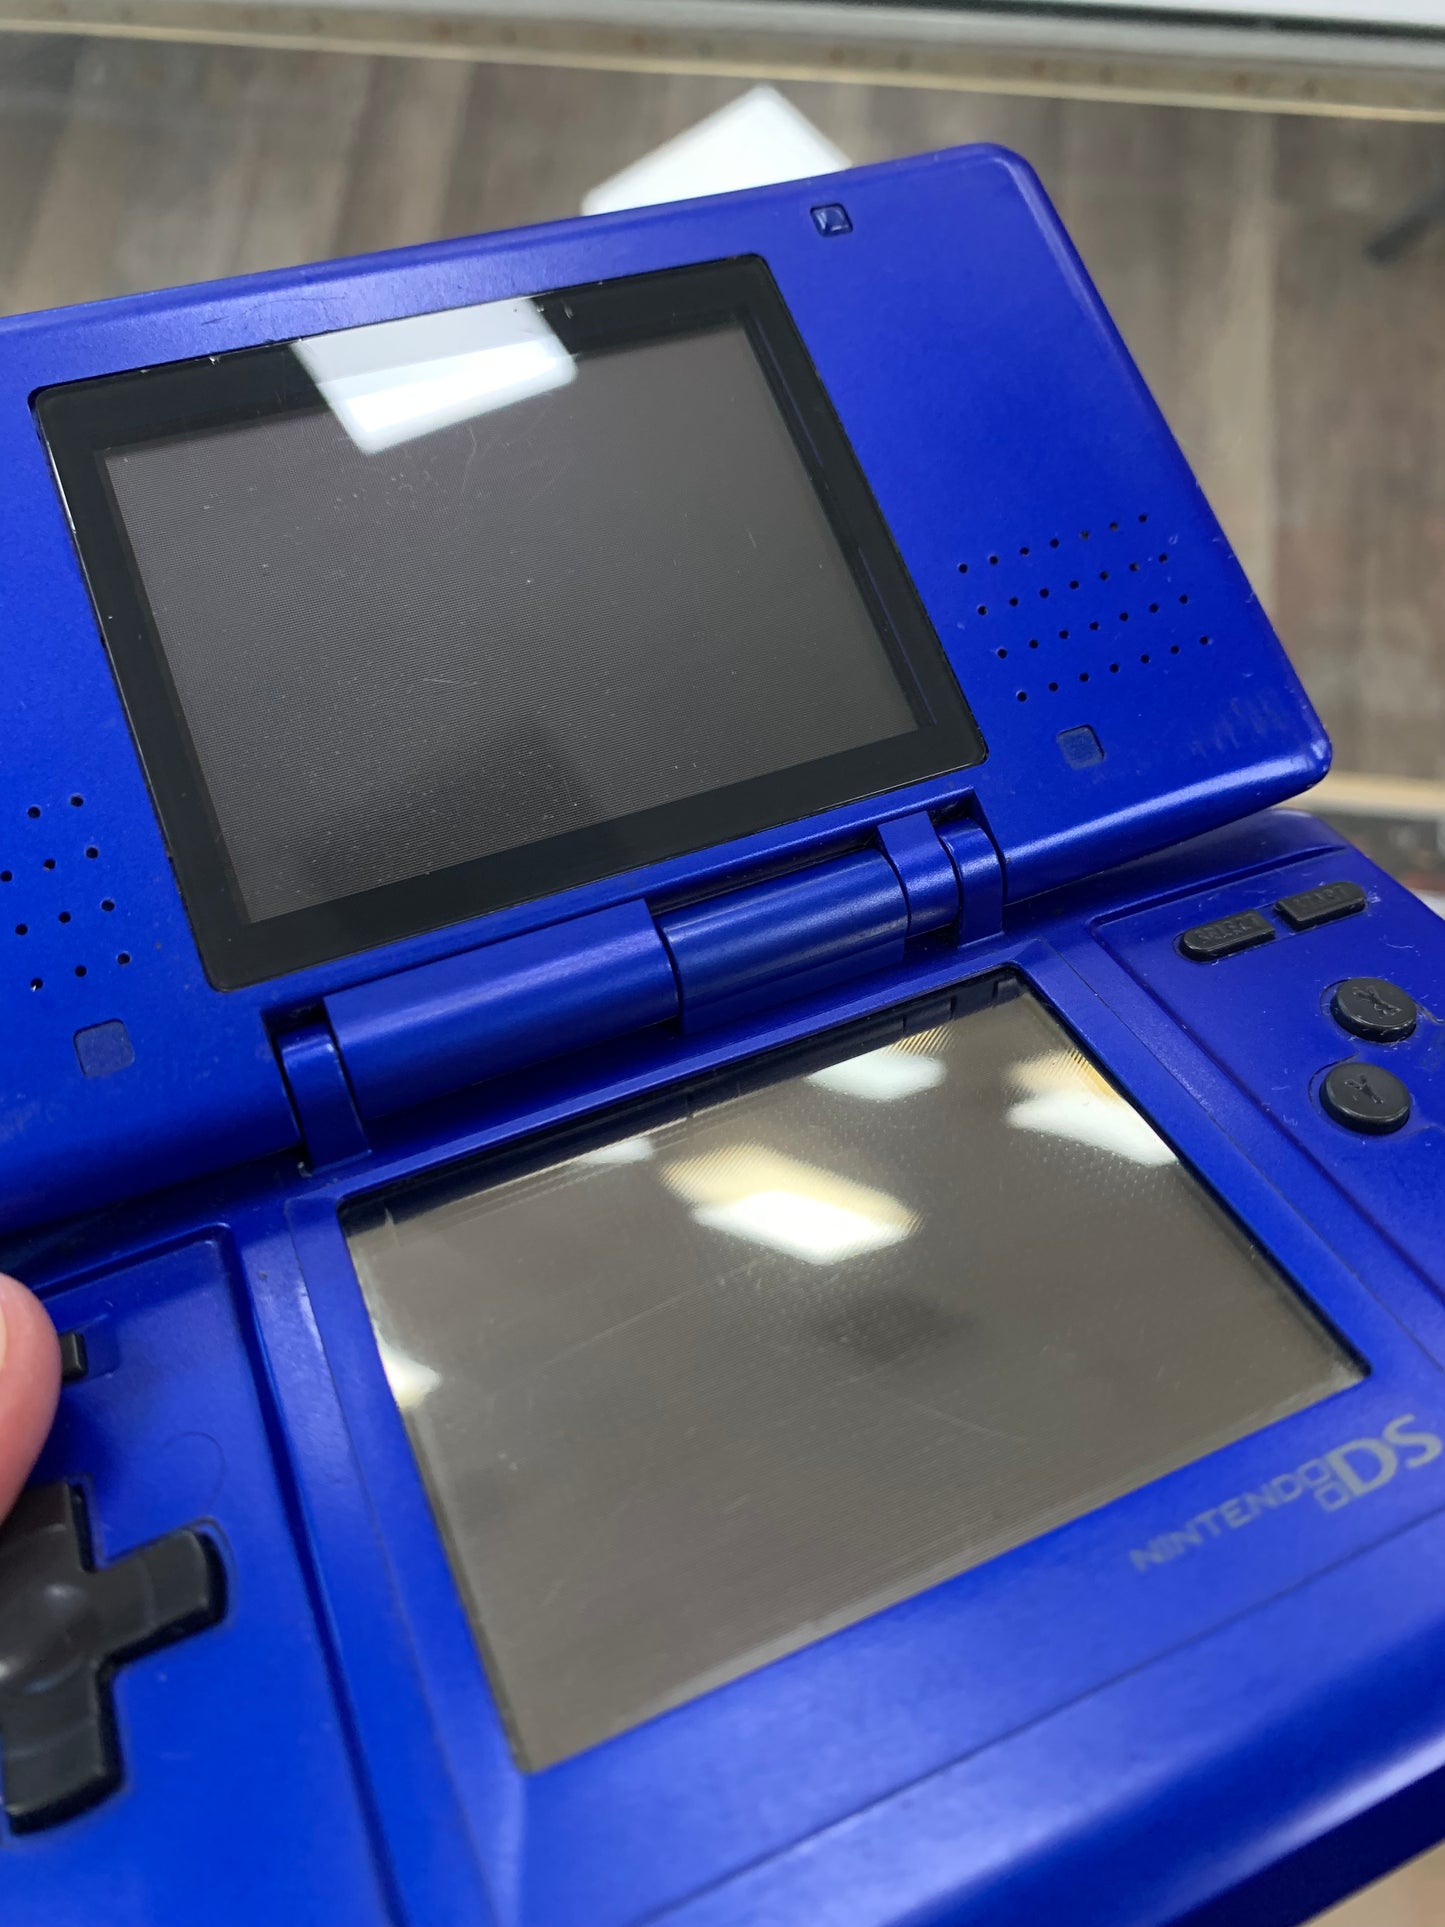 Blue Nintendo DS System